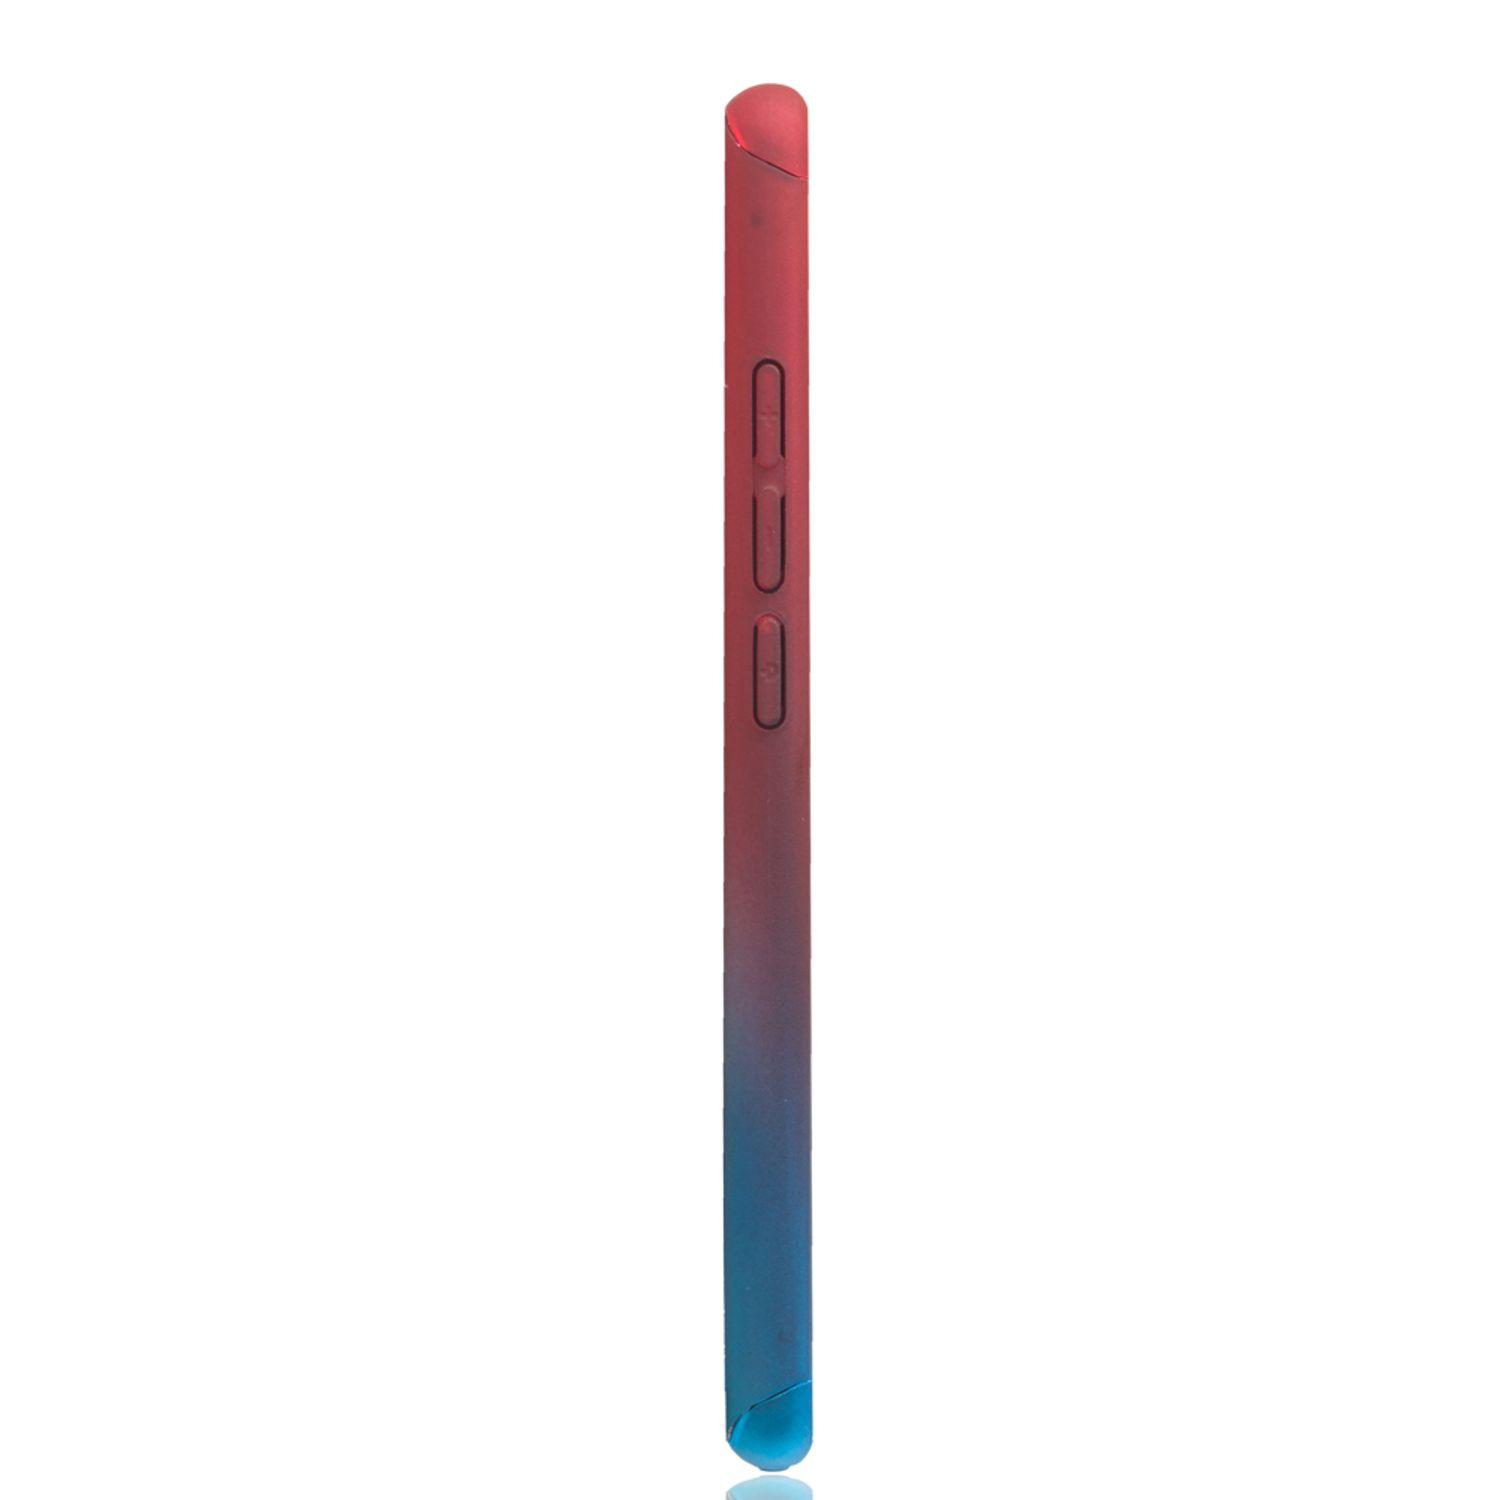 KÖNIG DESIGN Schutzhülle, Full Cover, 8 Mehrfarbig SE, Mi Xiaomi